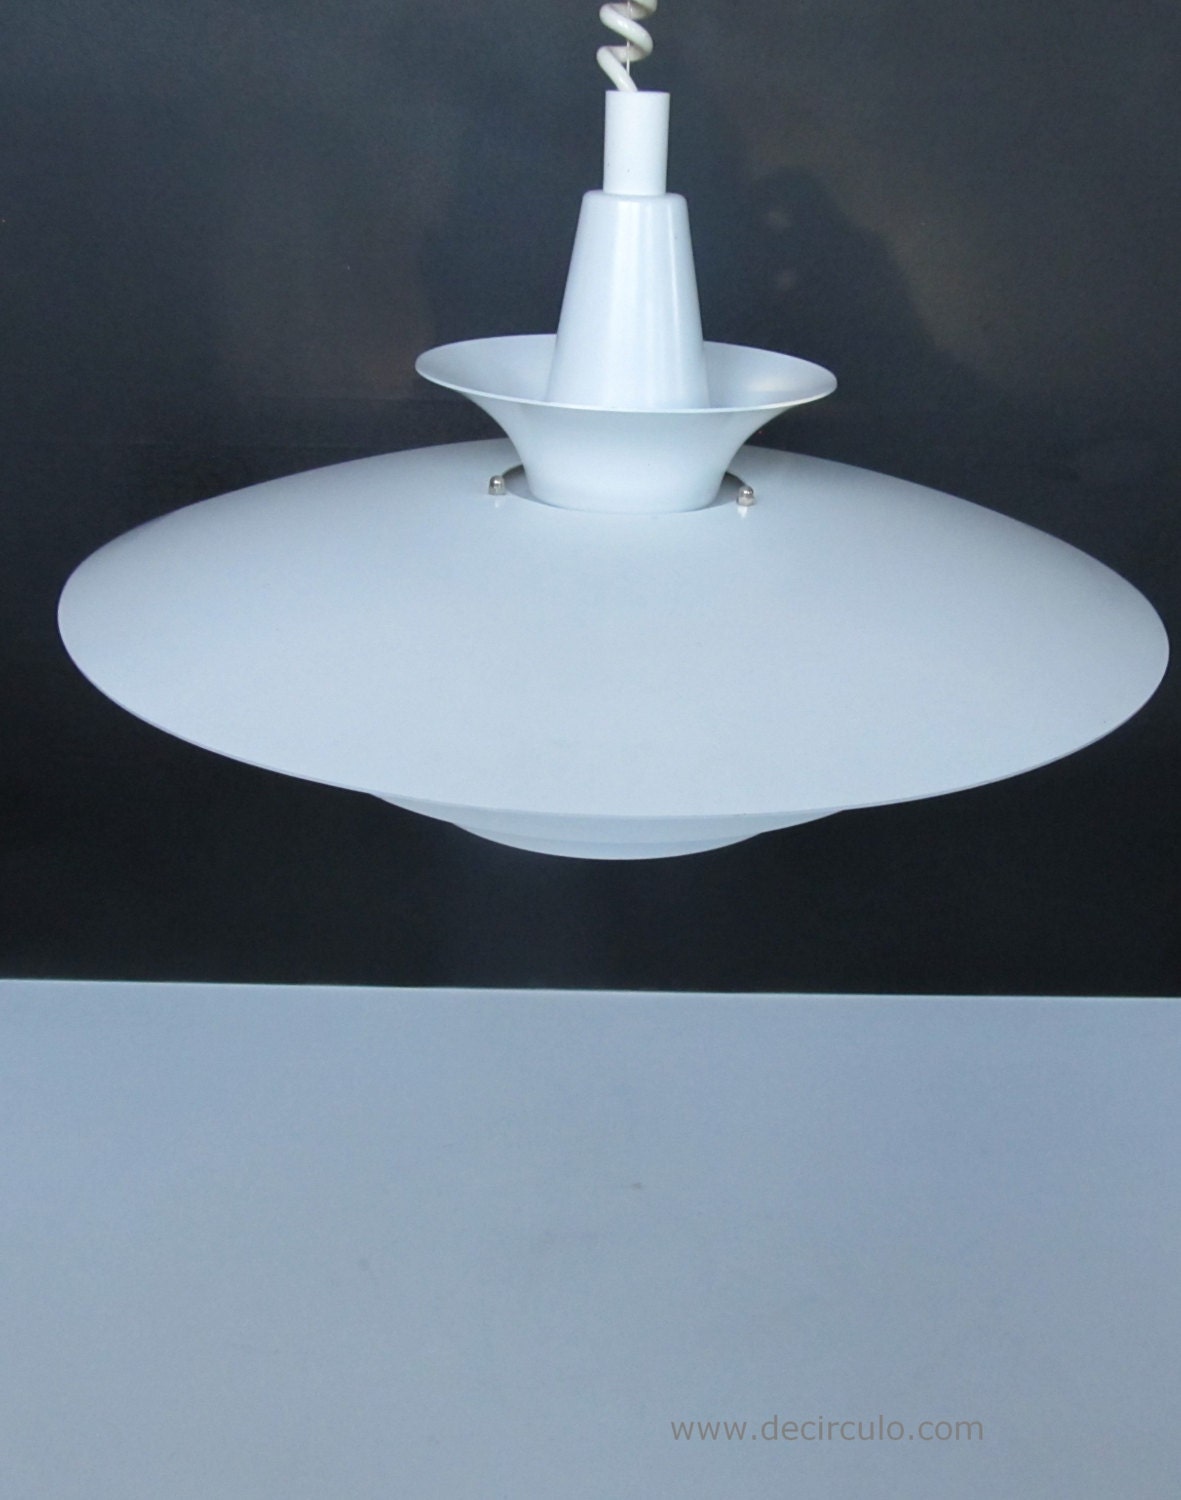 Abo Randers danish design lamp, big scandinavian white design light